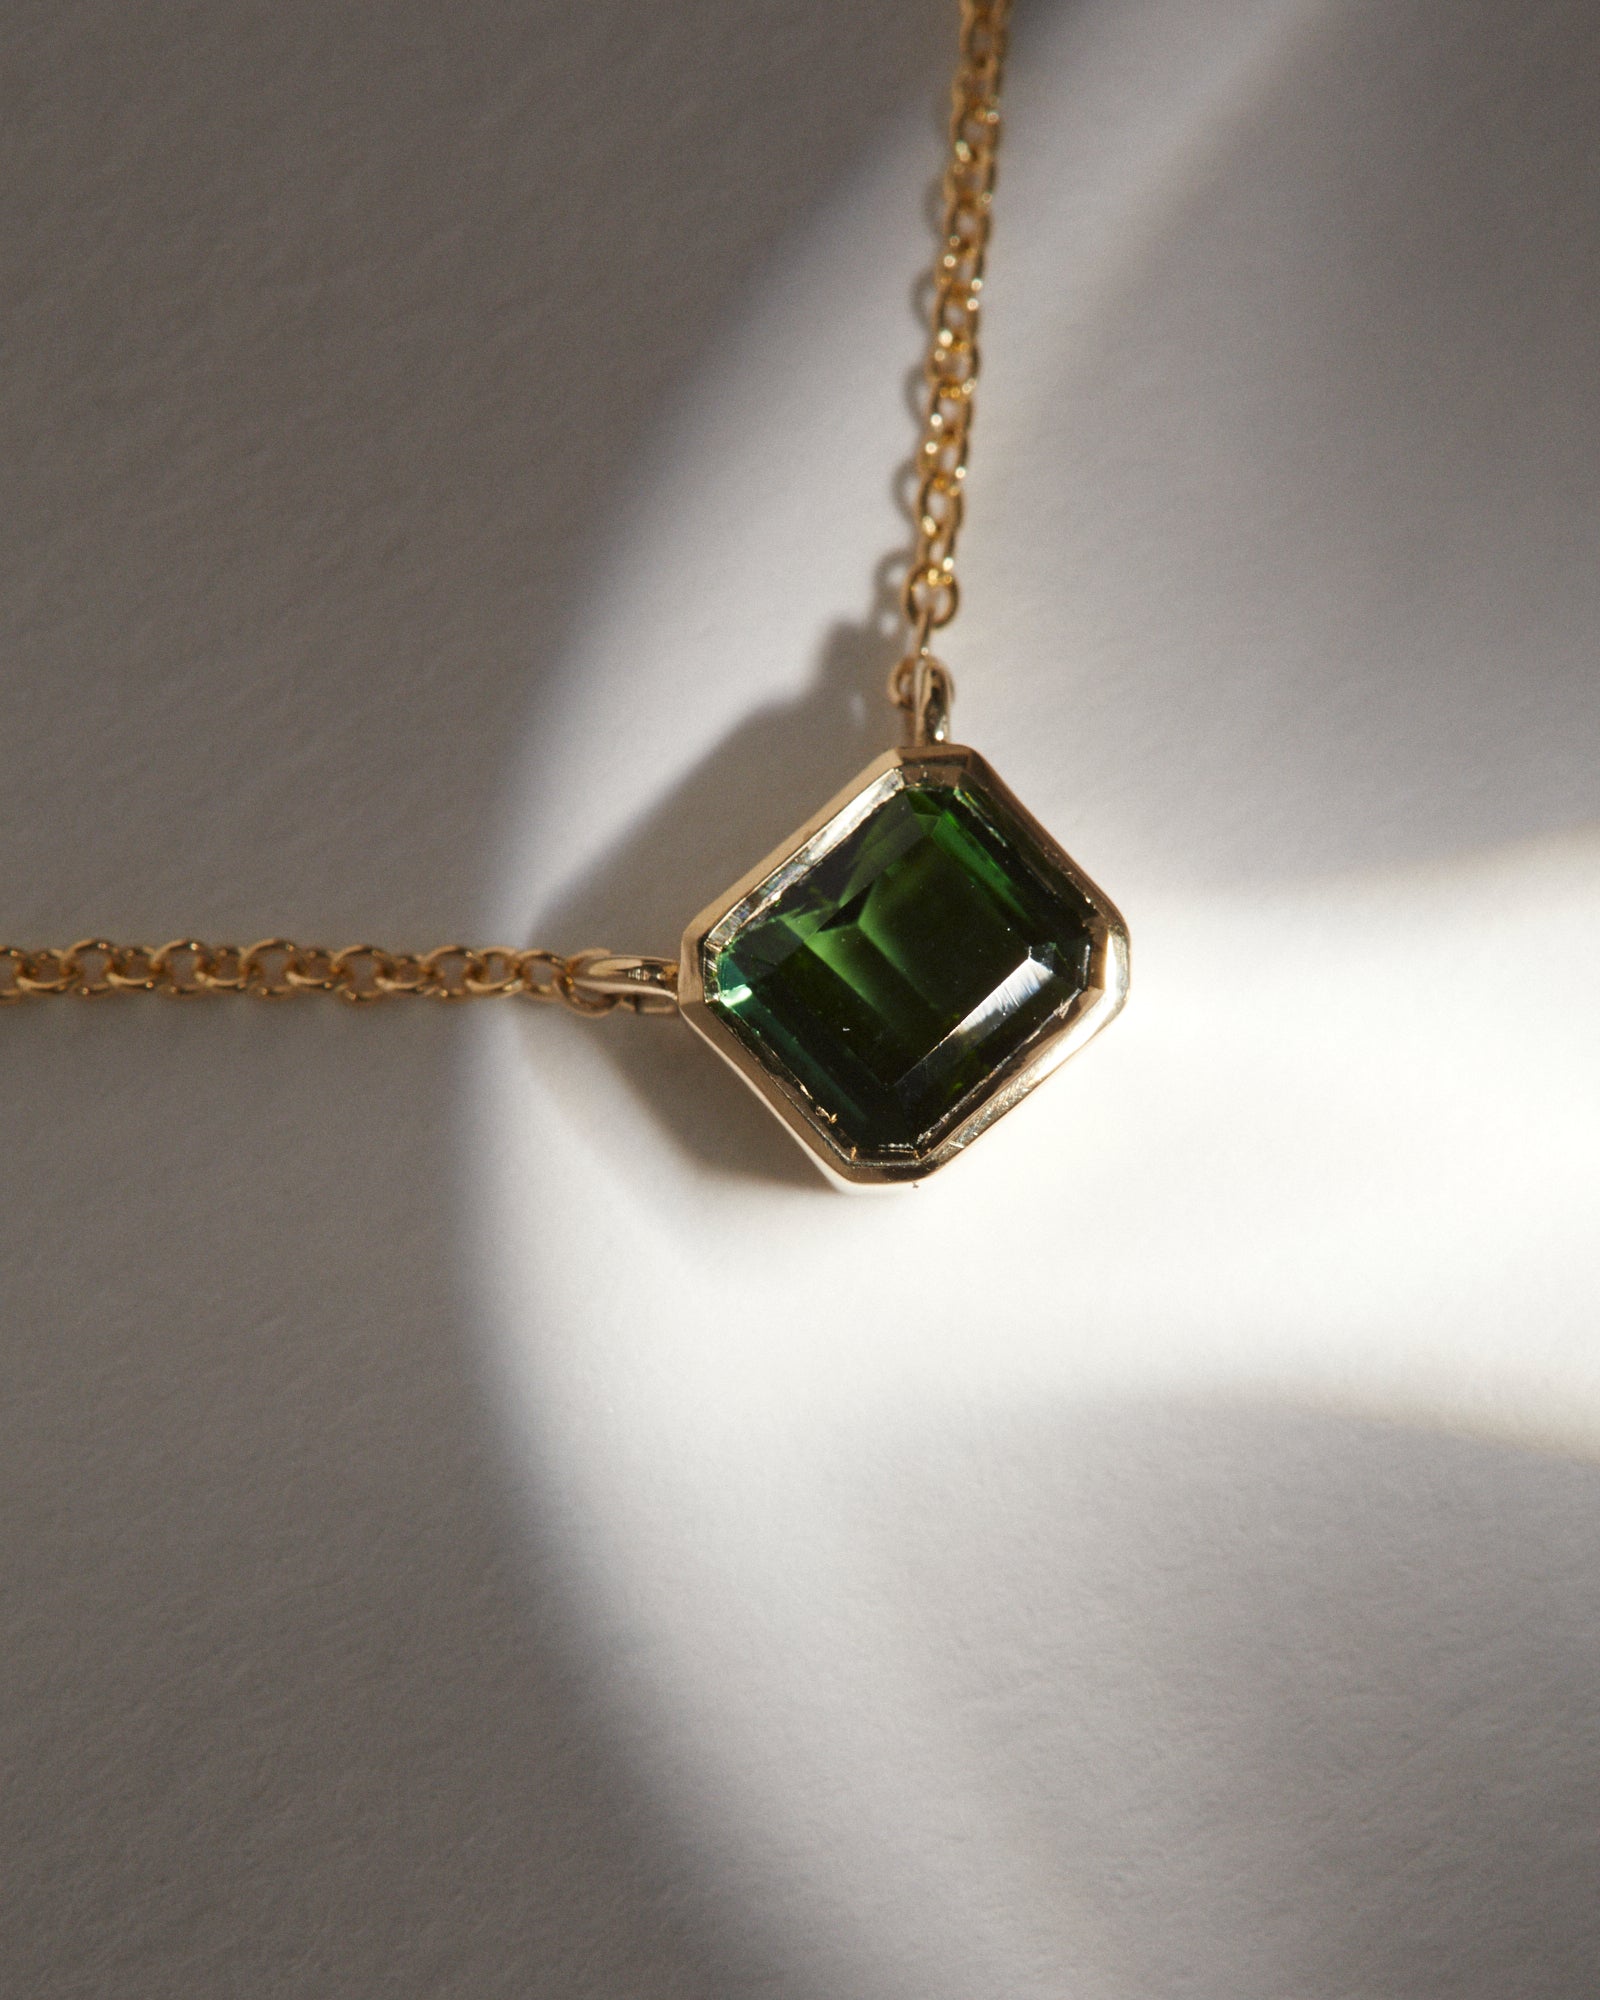 1ct Emerald cut Green Tourmaline necklace.